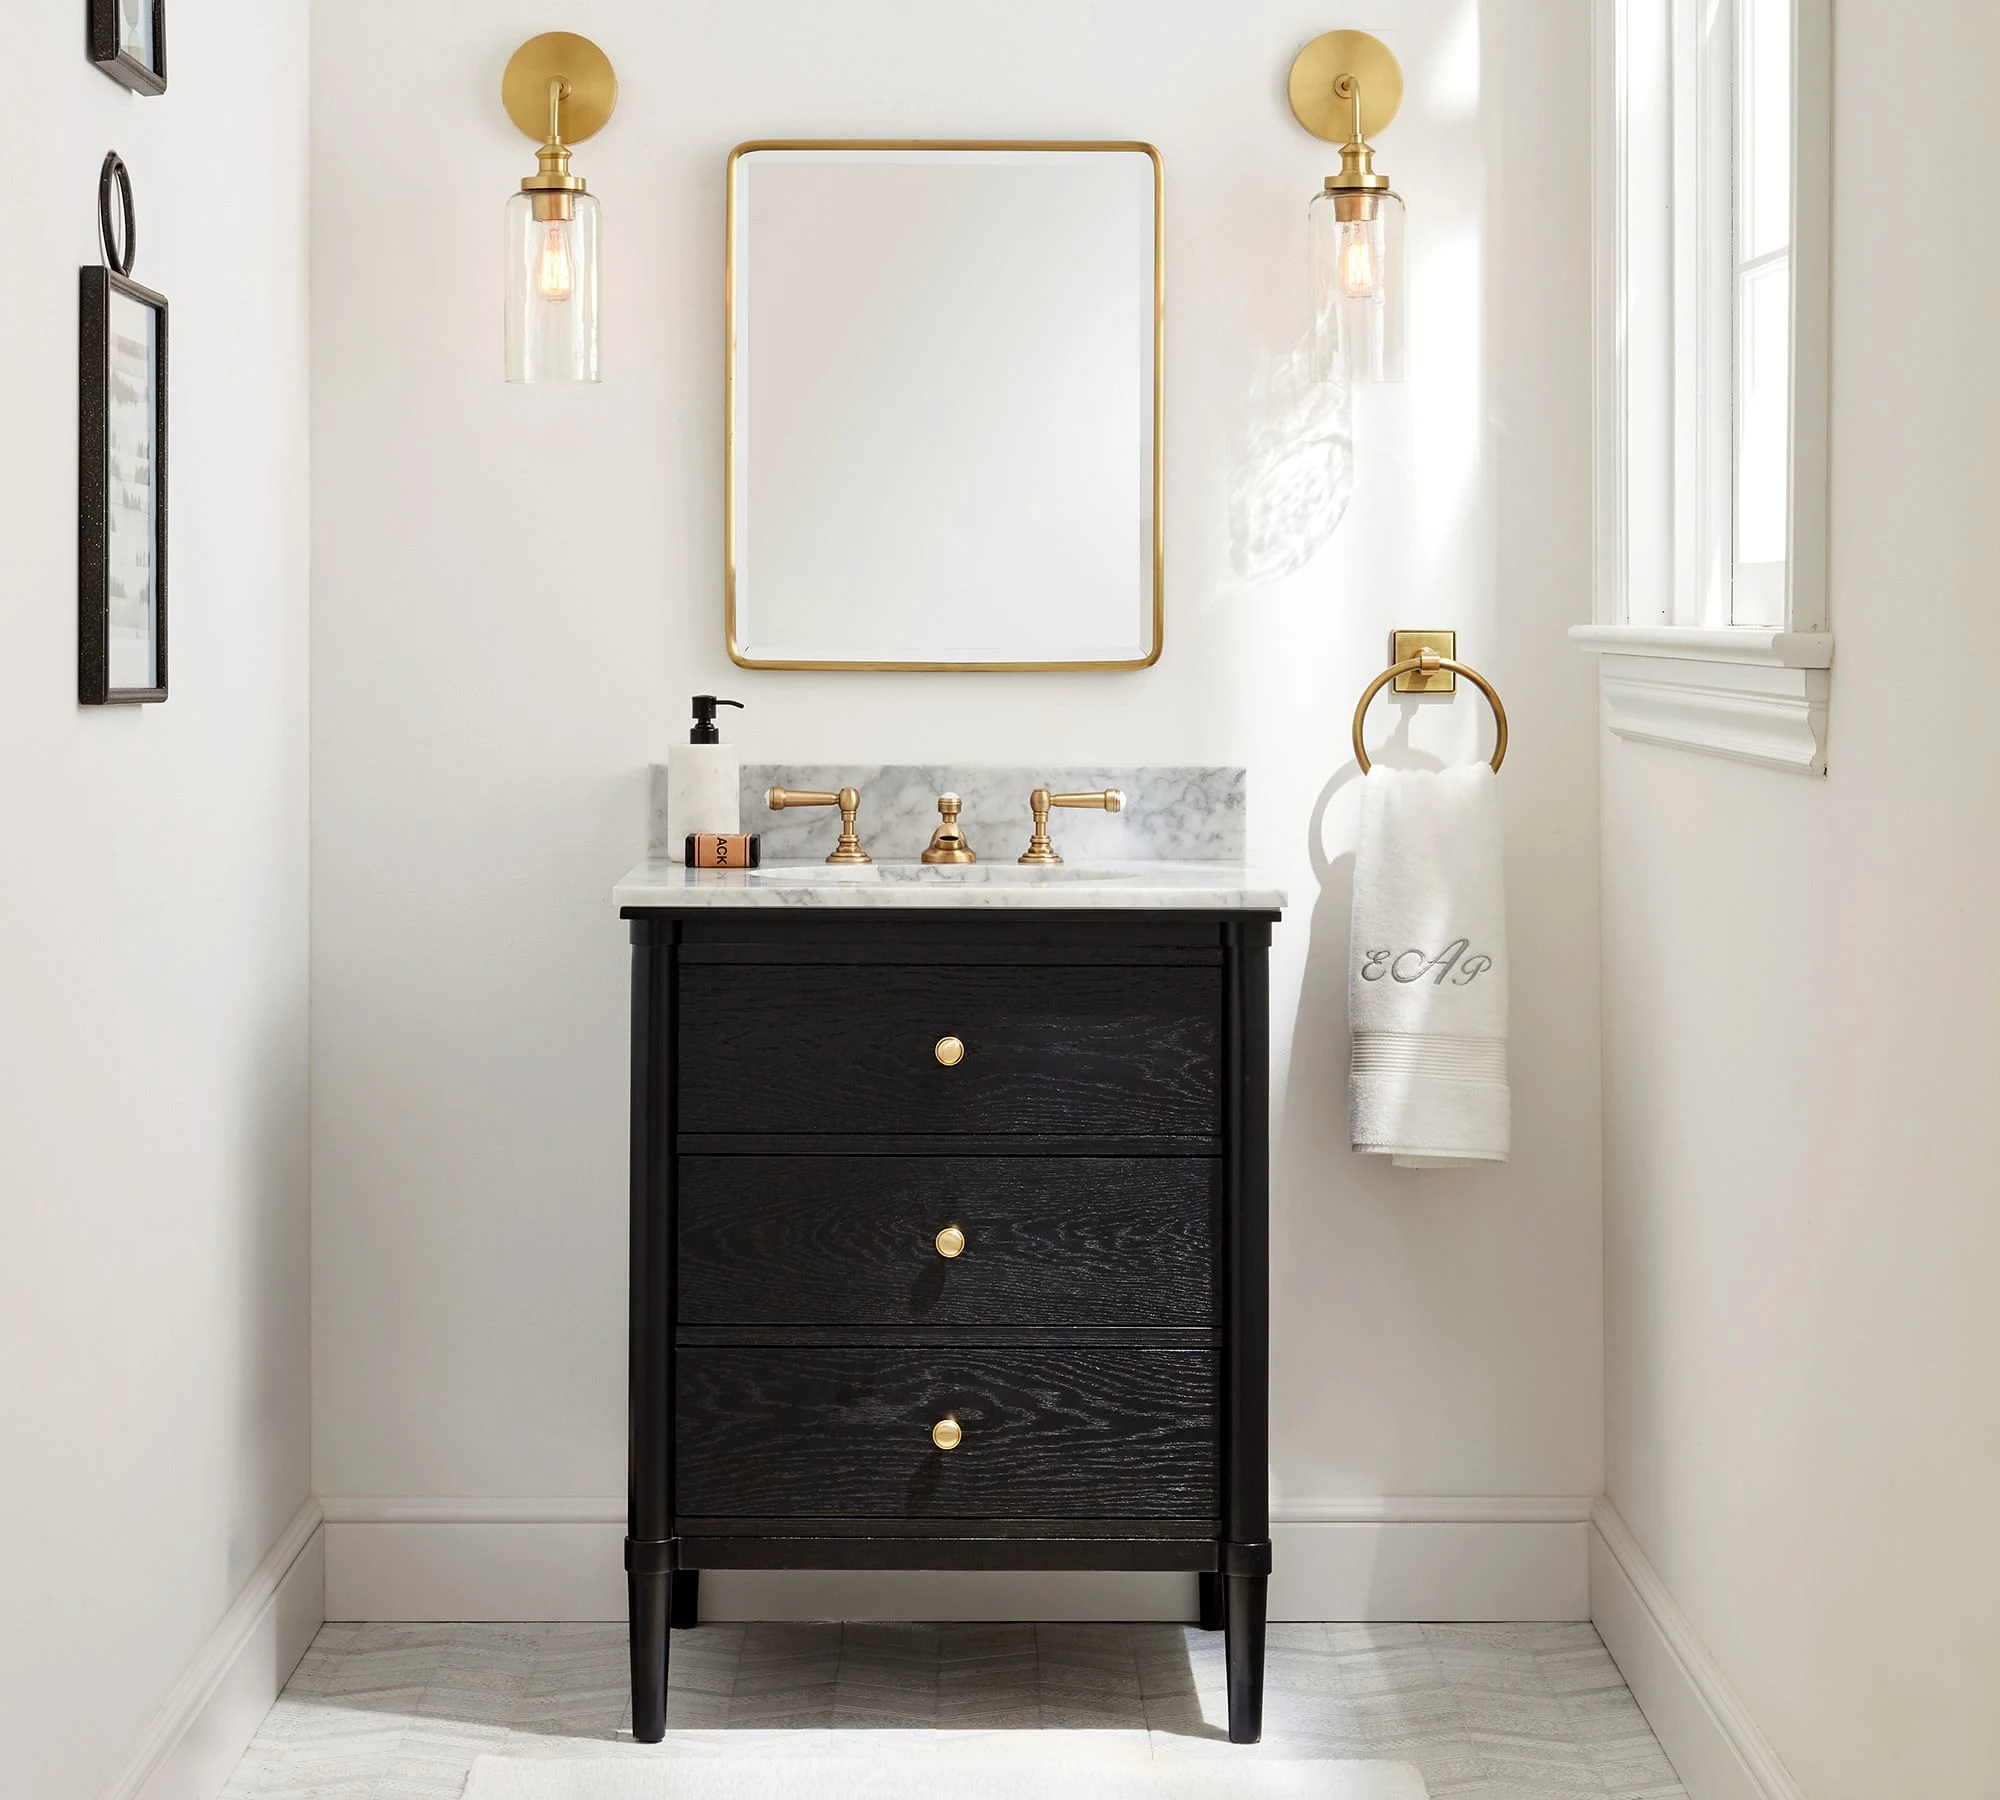 Bath Mirrors Smart Antifog Vanity Wall Mounted Mirror with Shaving Mirror Bathroom